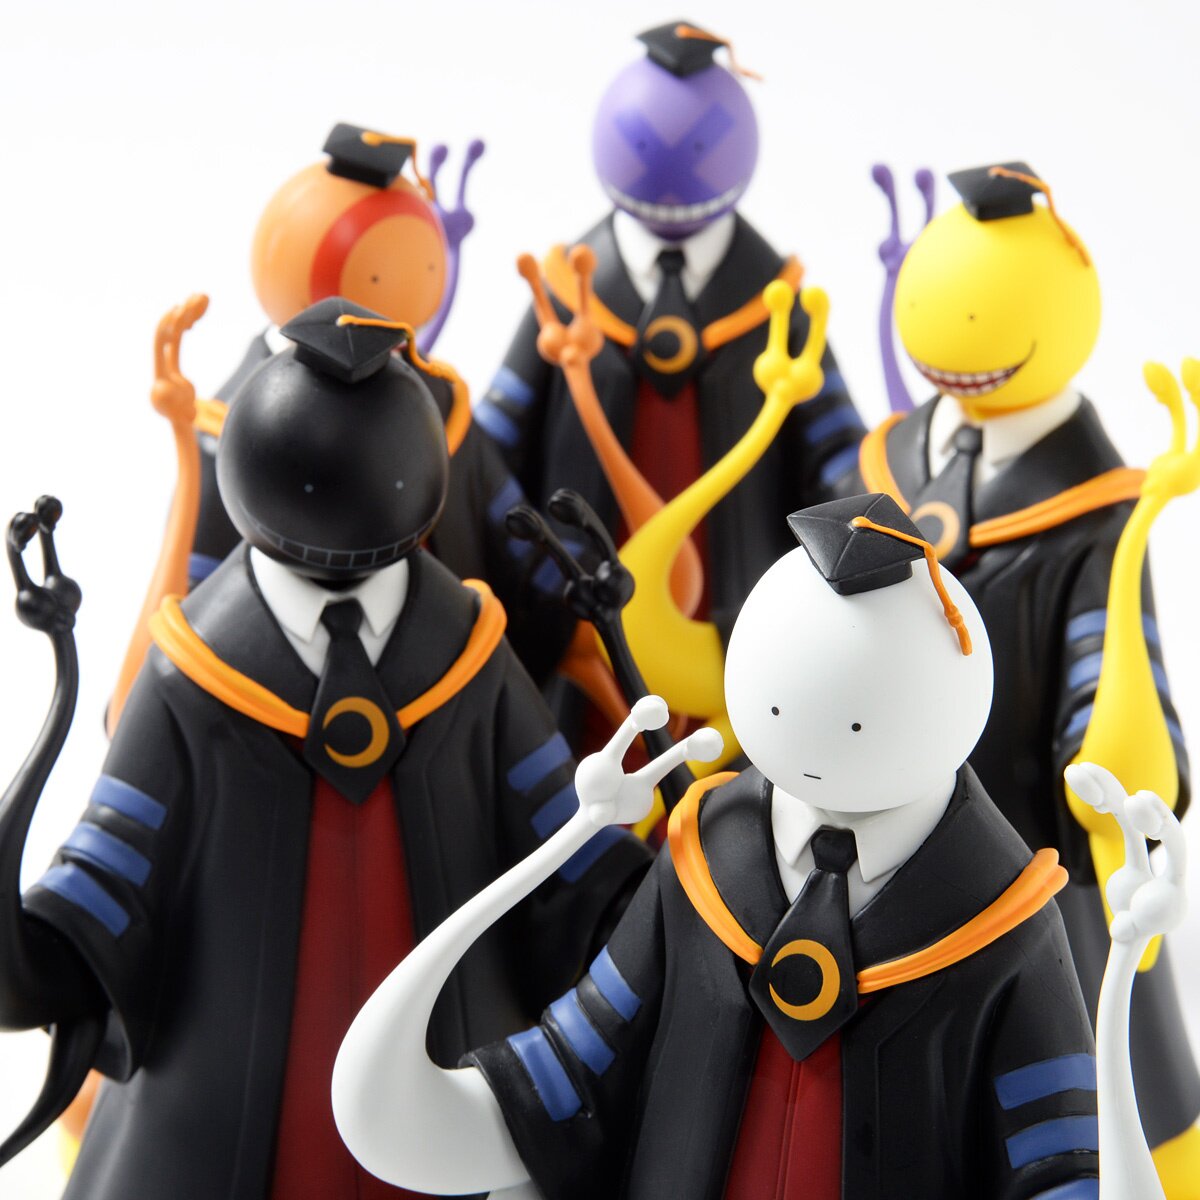 Review: Assassination Classroom – Anime Bird